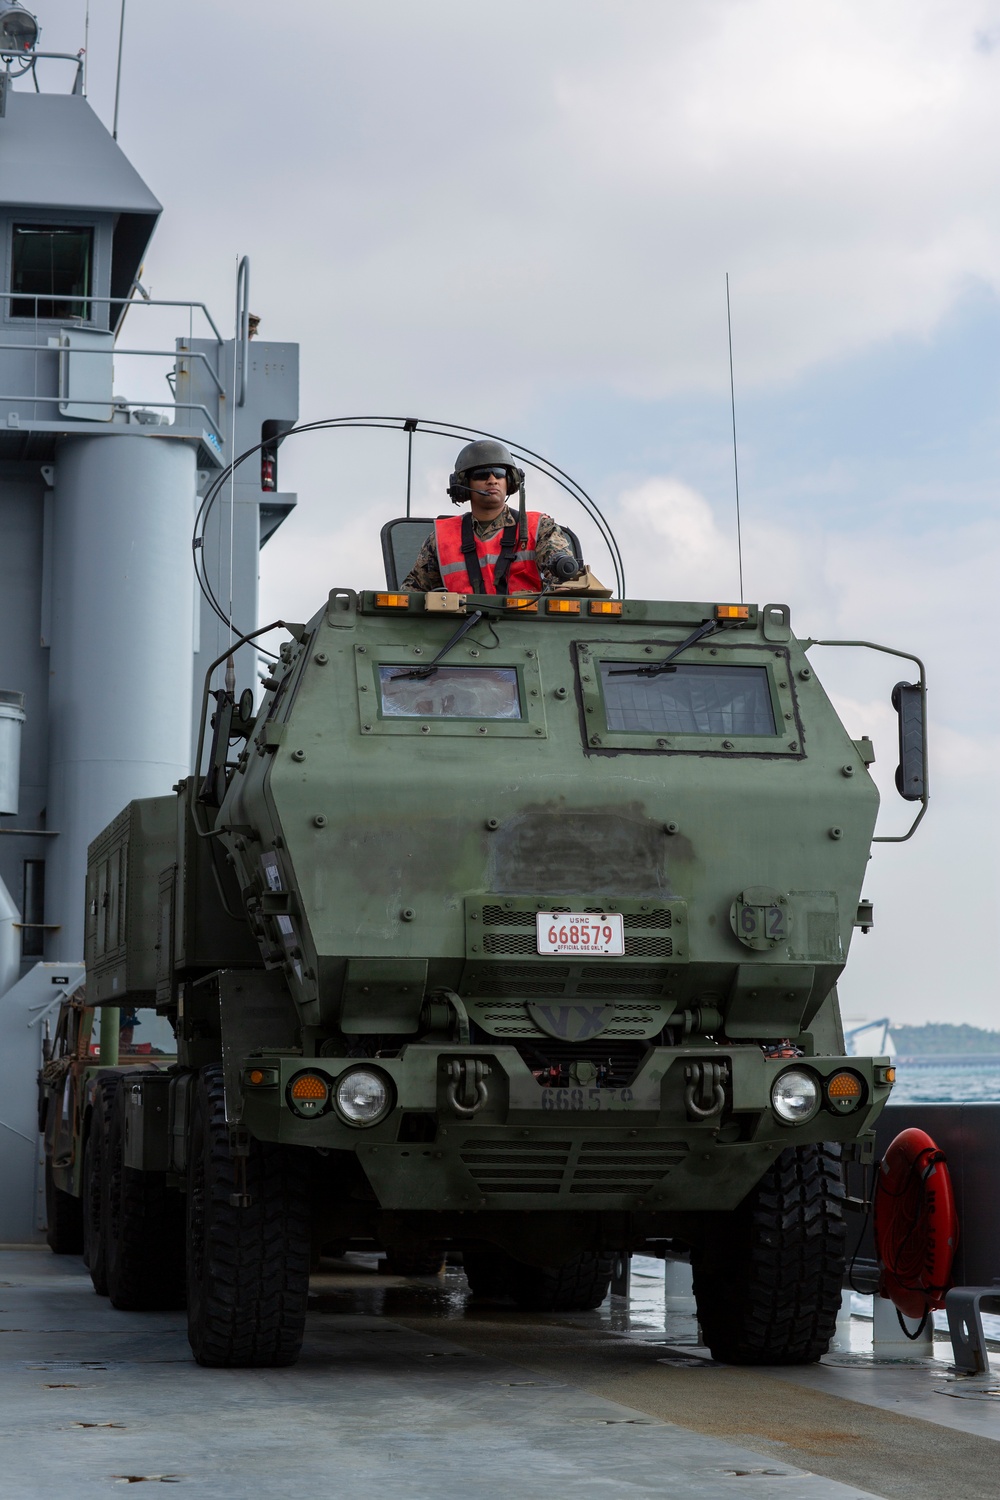 U.S. Marine High Mobility Artillery Rocket System embarks on Army landing craft